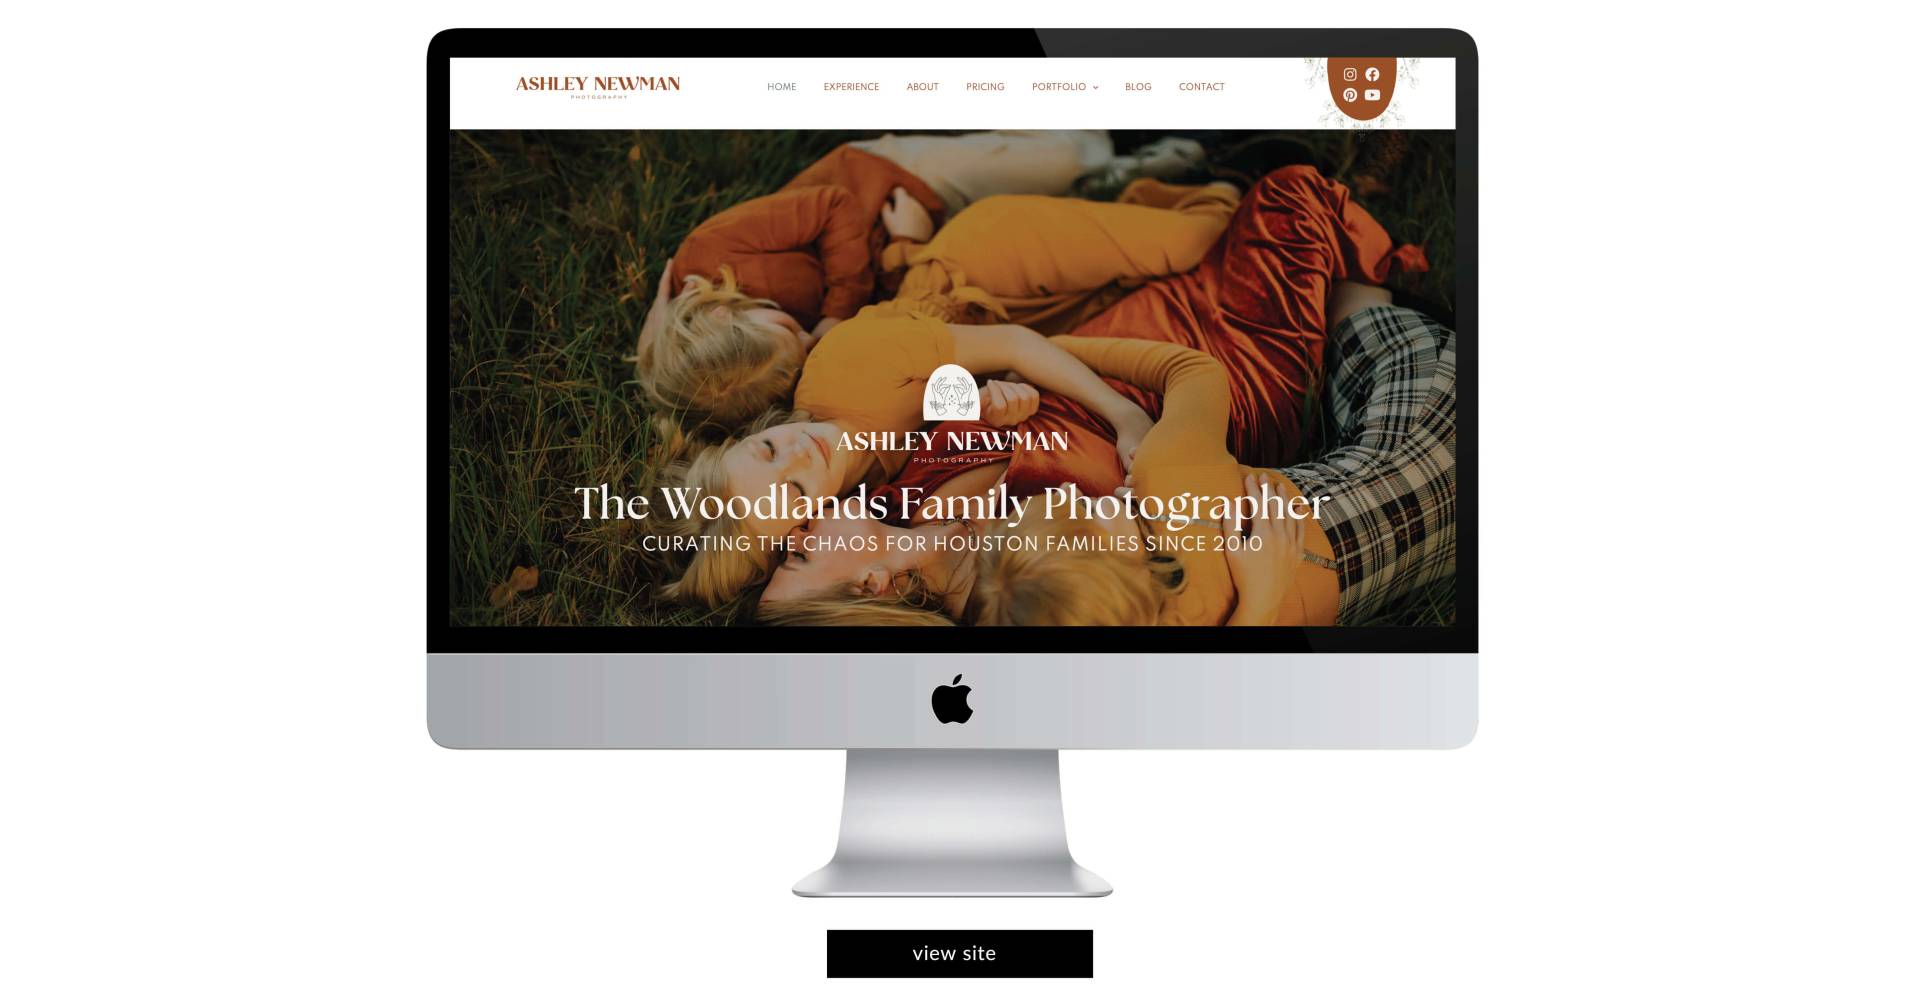 Ashley Newman Photography - Digital Marketing for Wedding Photographers - Brandlink Media Marketing Agency 2